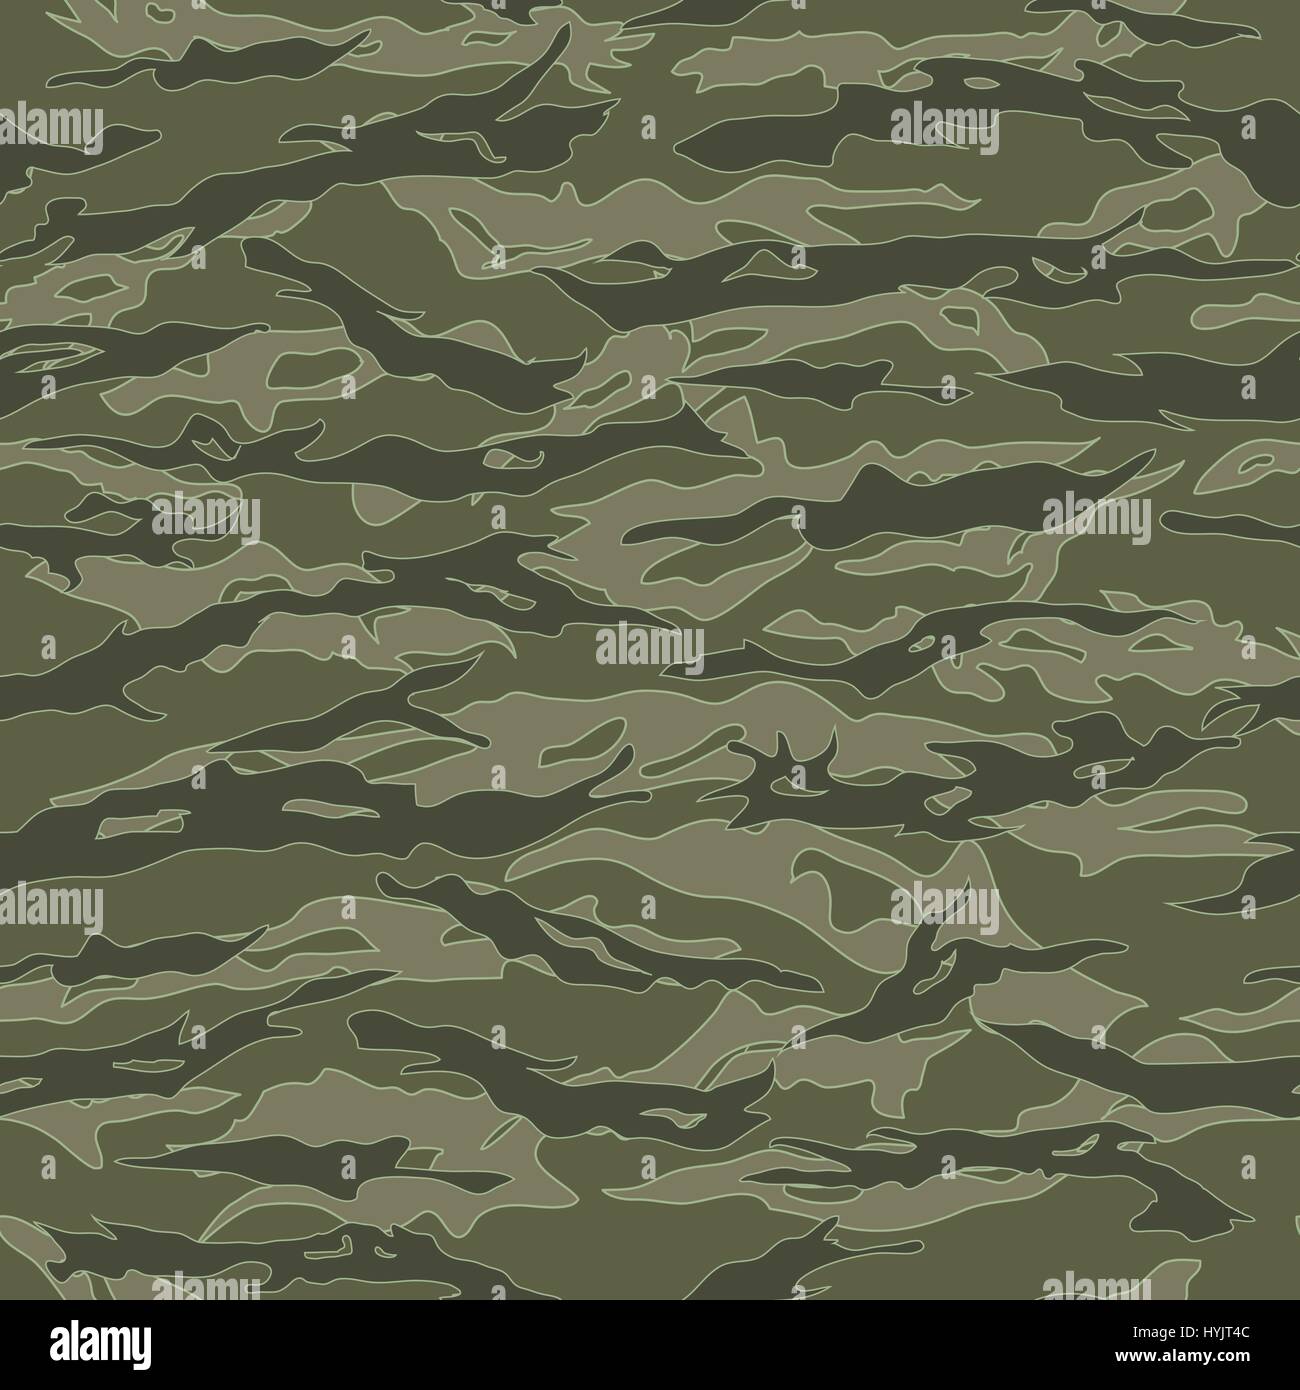 Vietnam Tiger stripe Camouflage seamless patterns Stock Vector Image ...